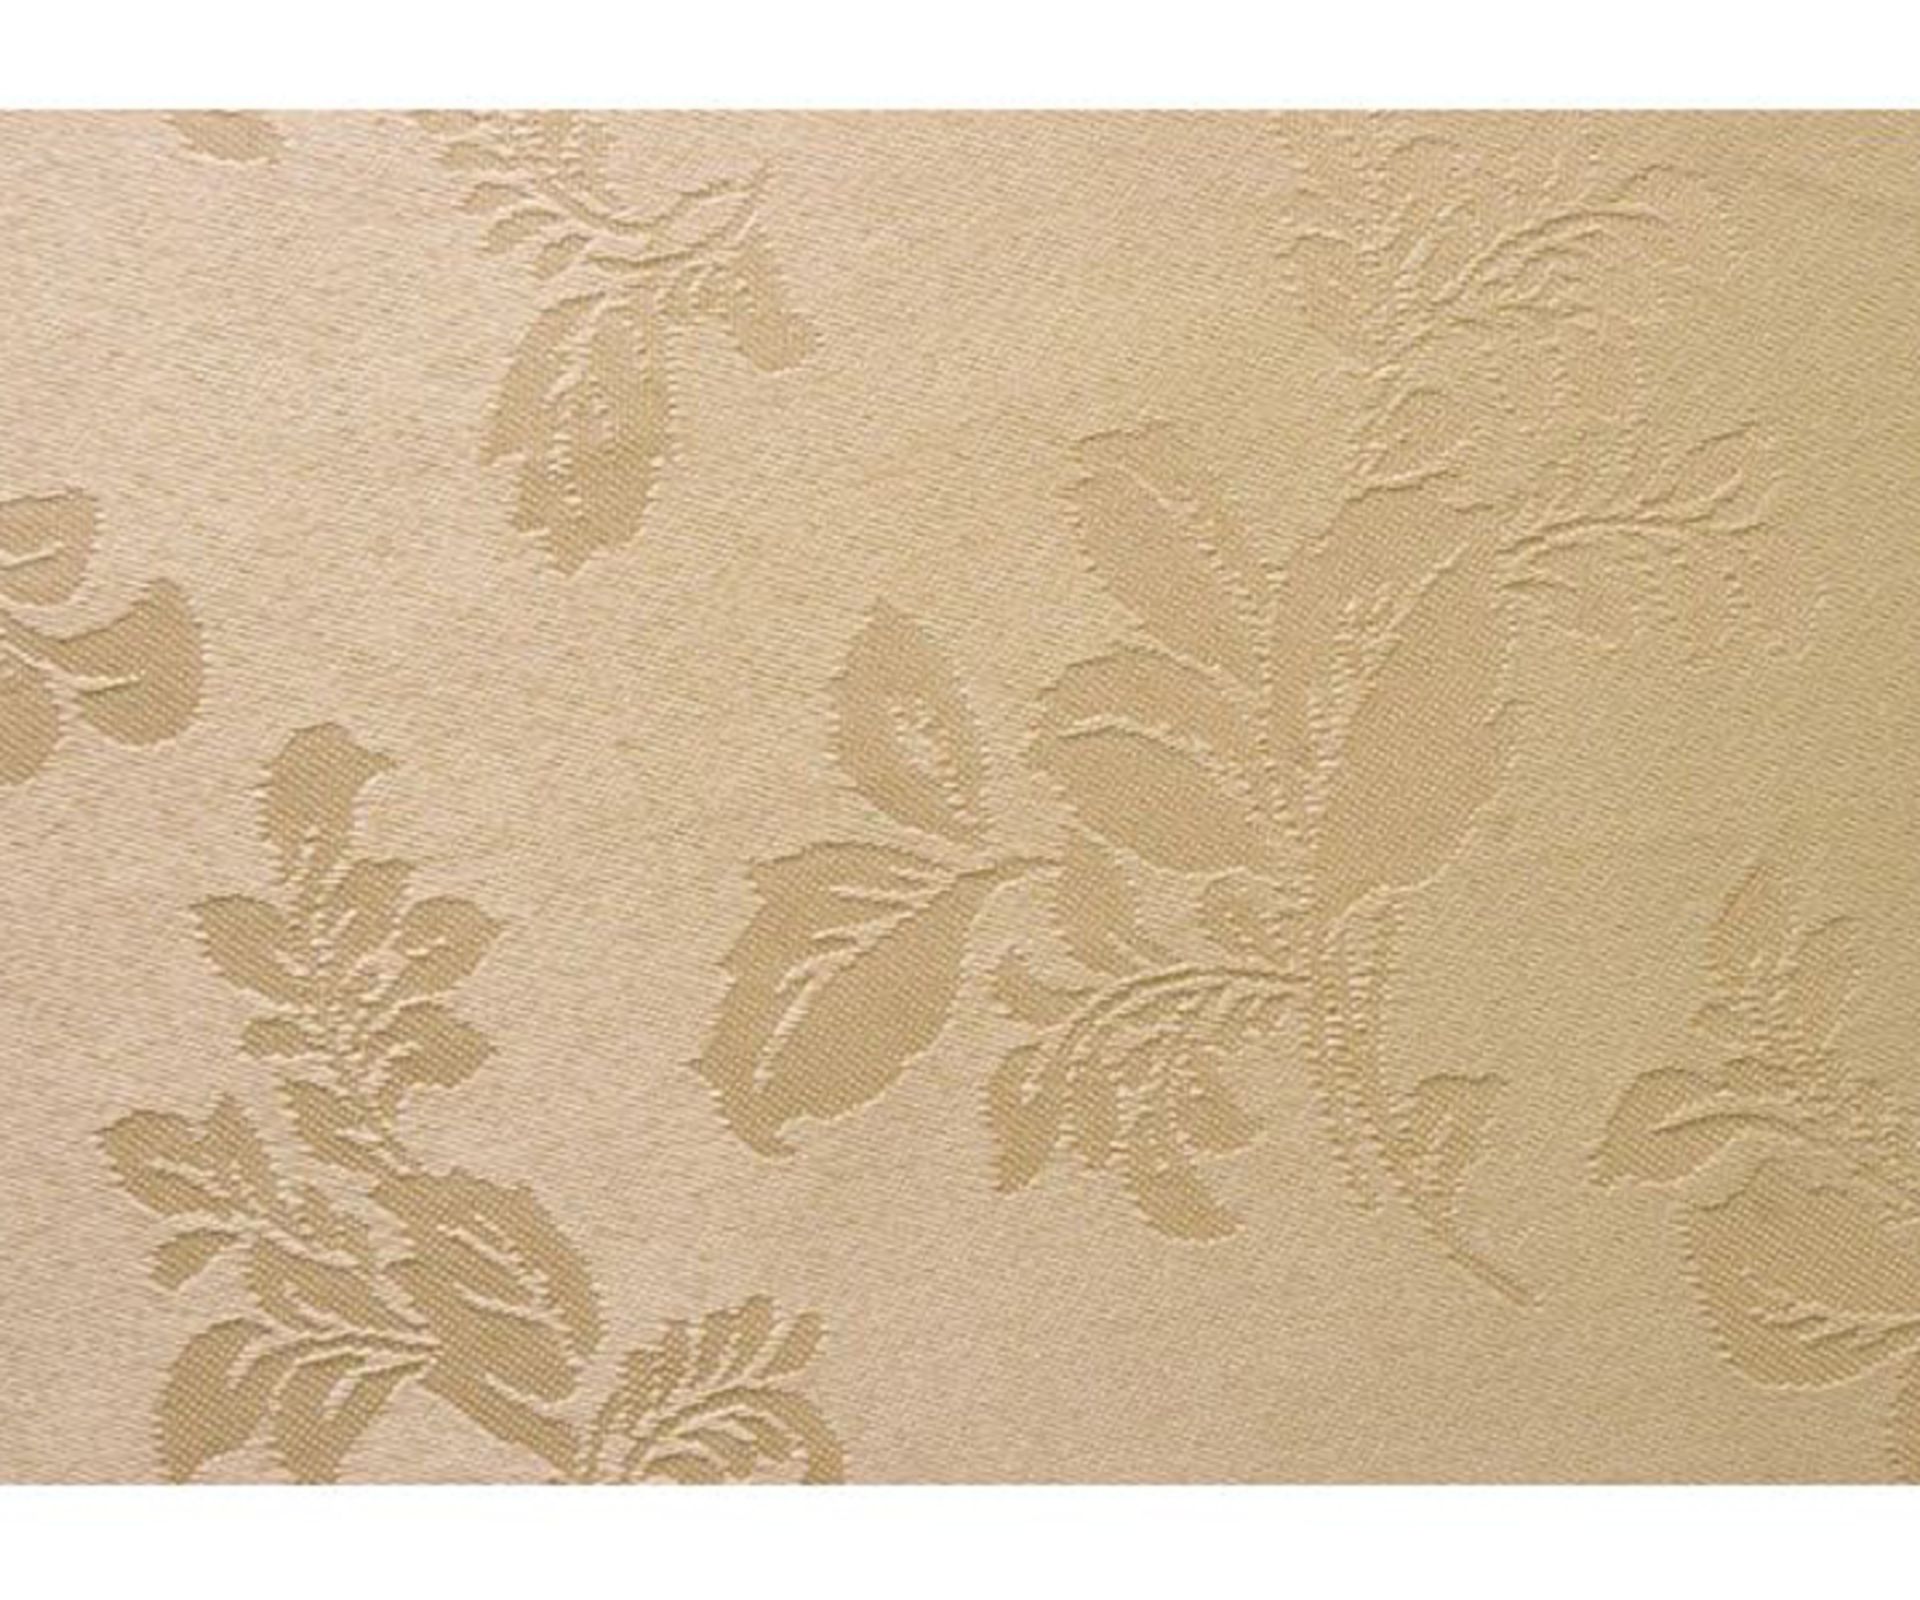 V Brand New Luxury Stain Resistant Linen Table Cloth 160 x 210cm Gold - ISP £34.99 (islshop-UK) - Image 2 of 2